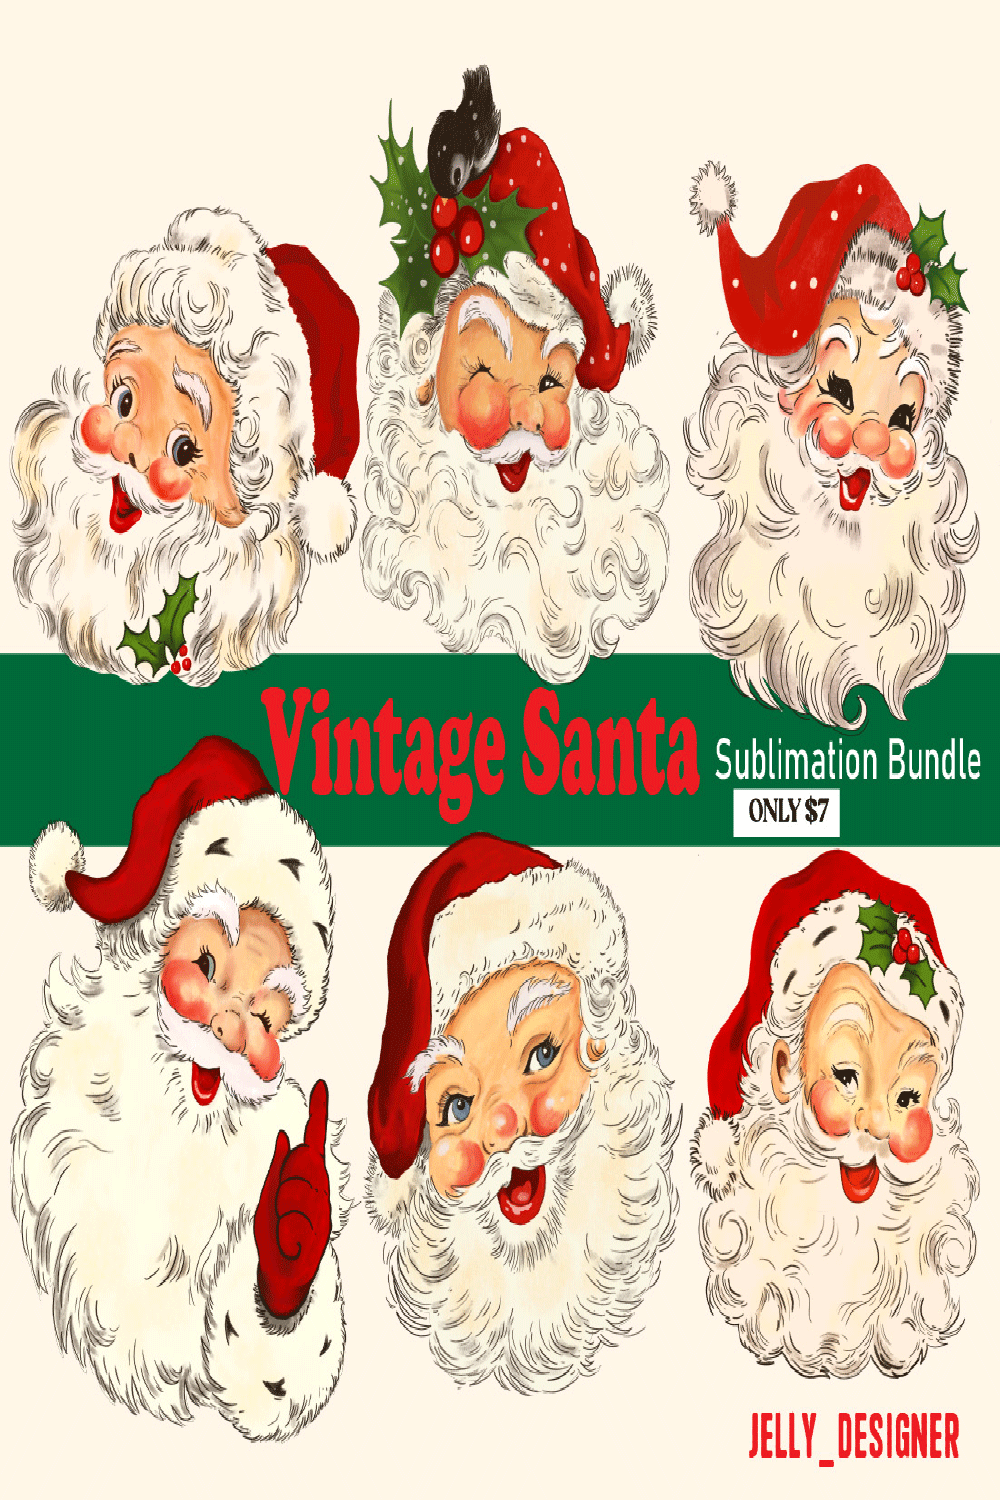 Vintage Santa Sublimation Bundle pinterest image.